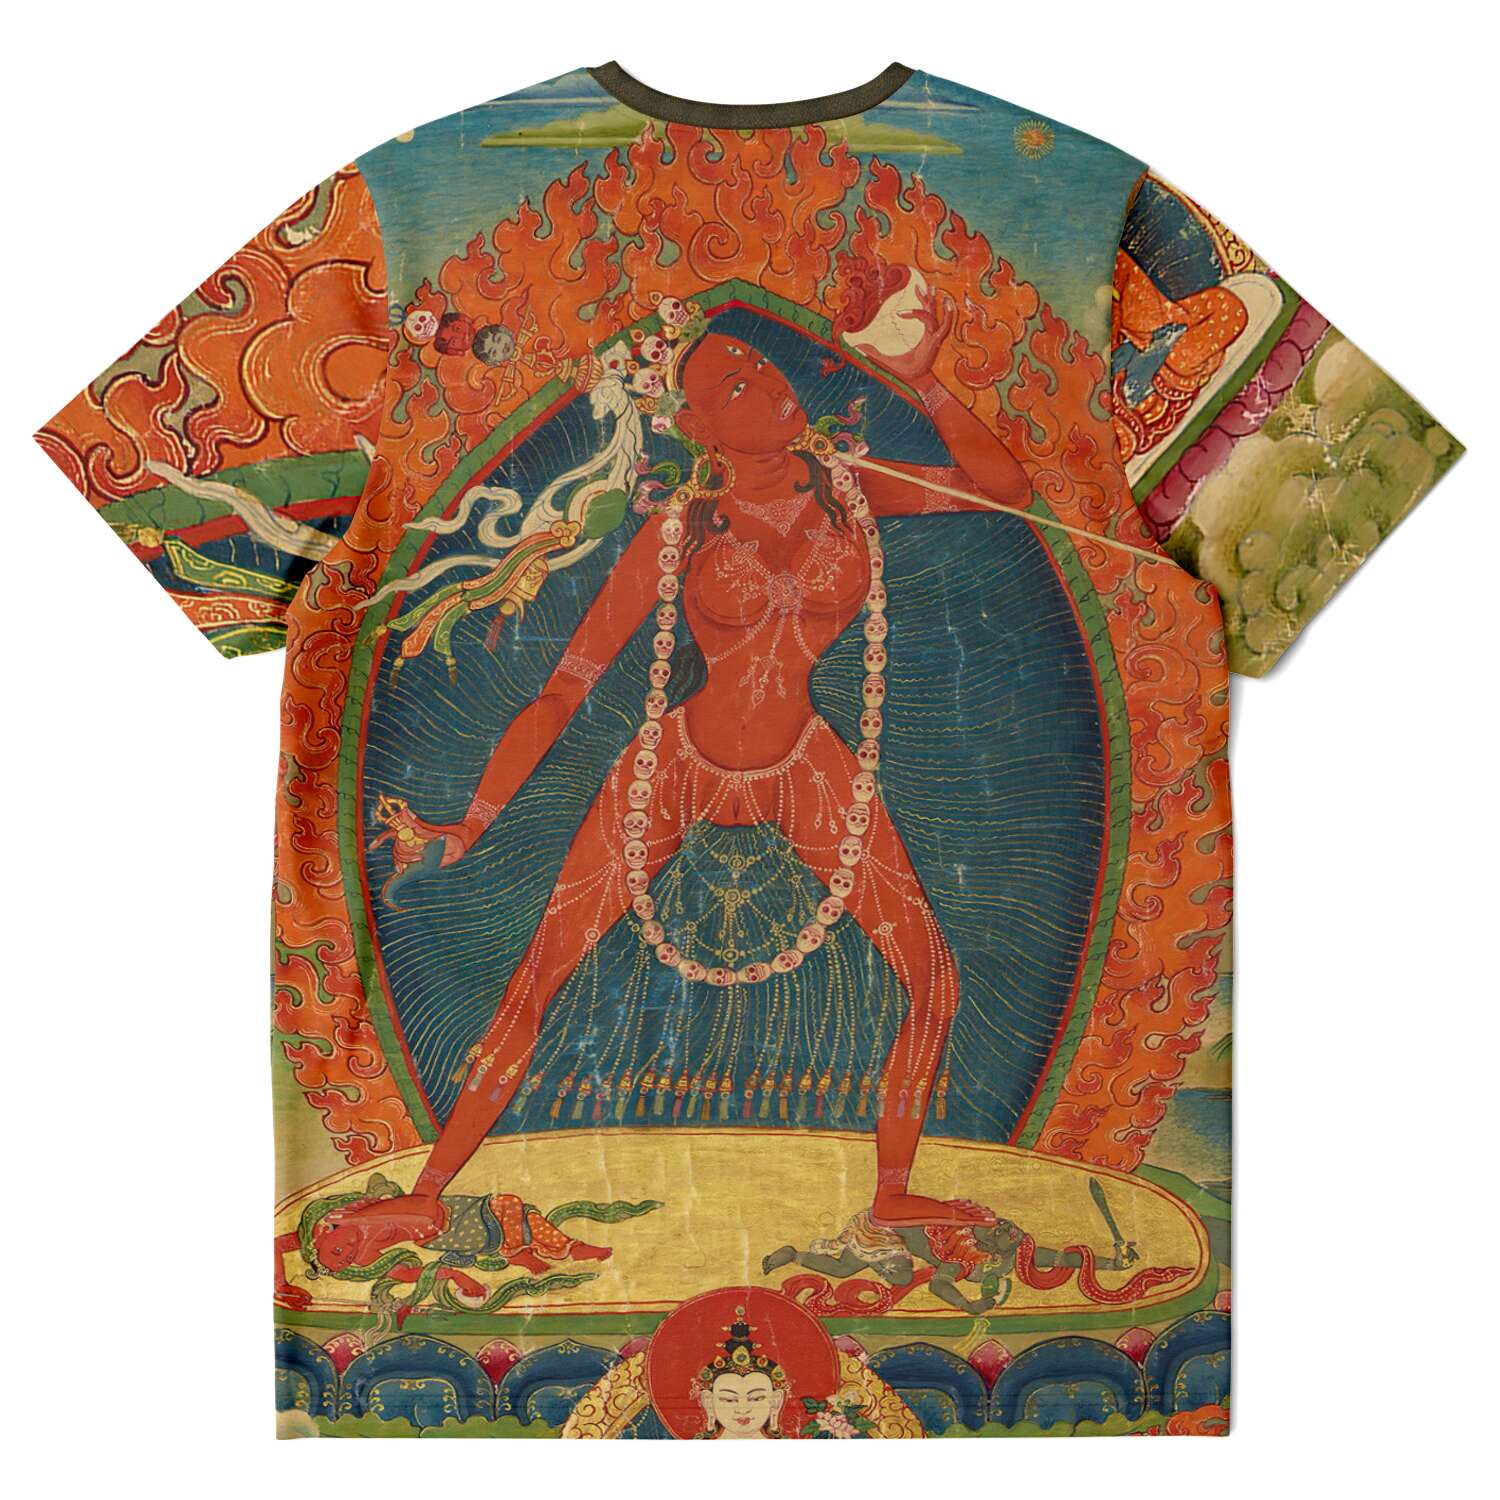 T-shirt Vajrayogini Tibetan Vajrayana Thangka Erotic Tantric Tantra Deity Goddess Feminist Buddhist Mahayana Vintage Antique Art T-Shirt Tee